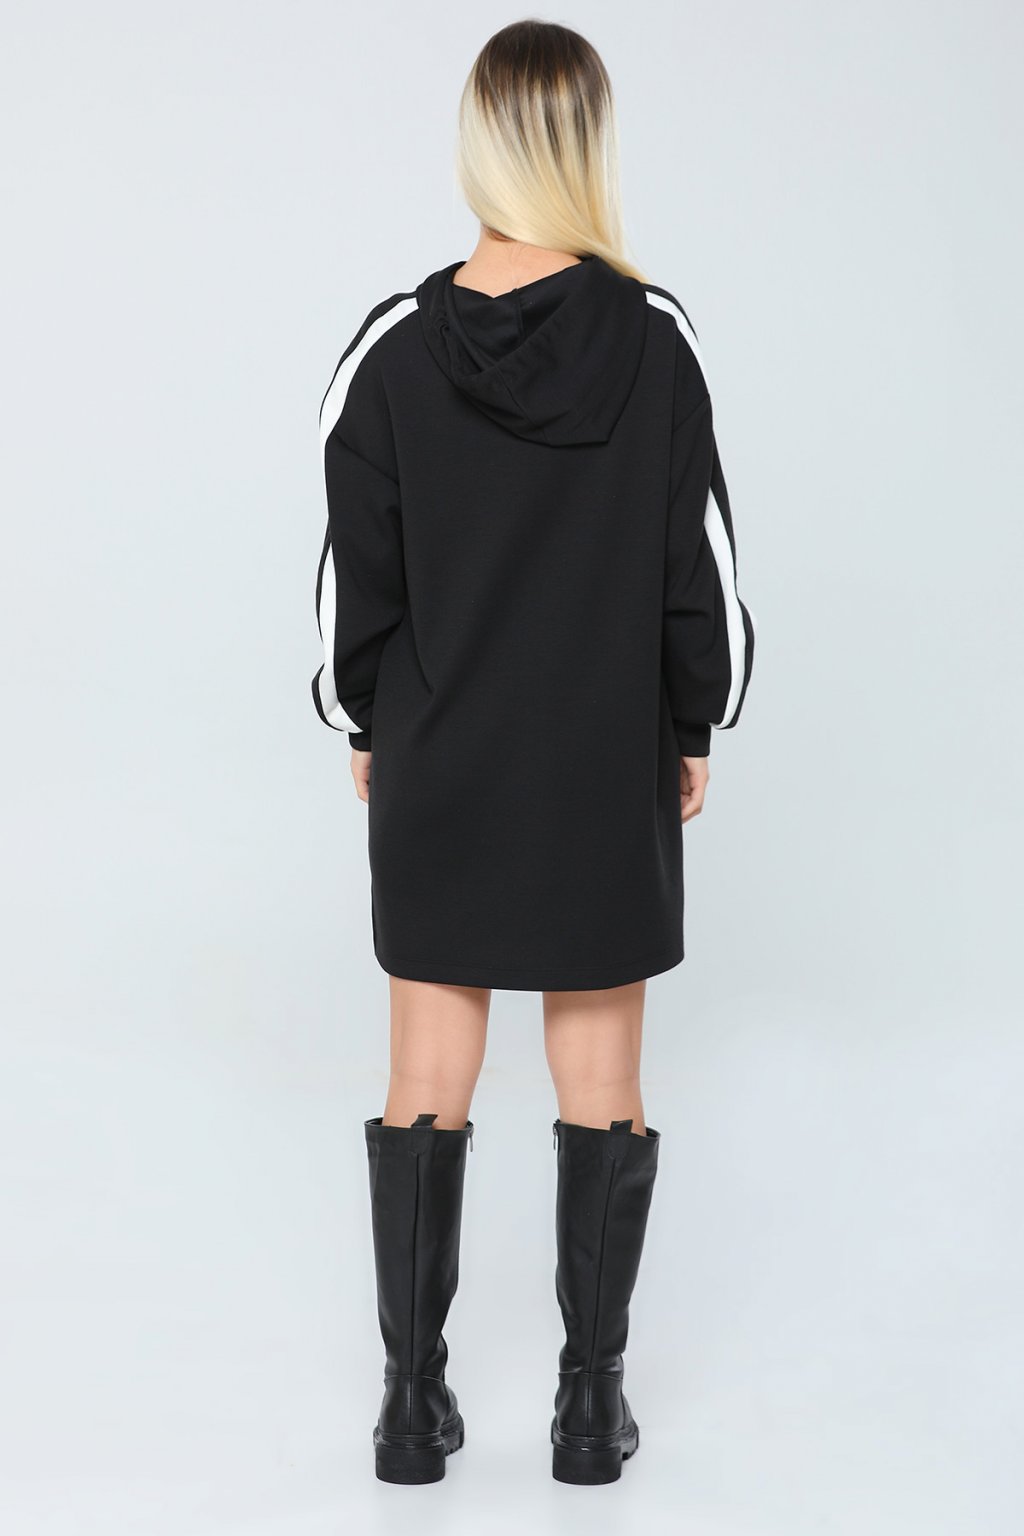 Čierna dámska tunika | FASHIONSUGAR e-shop